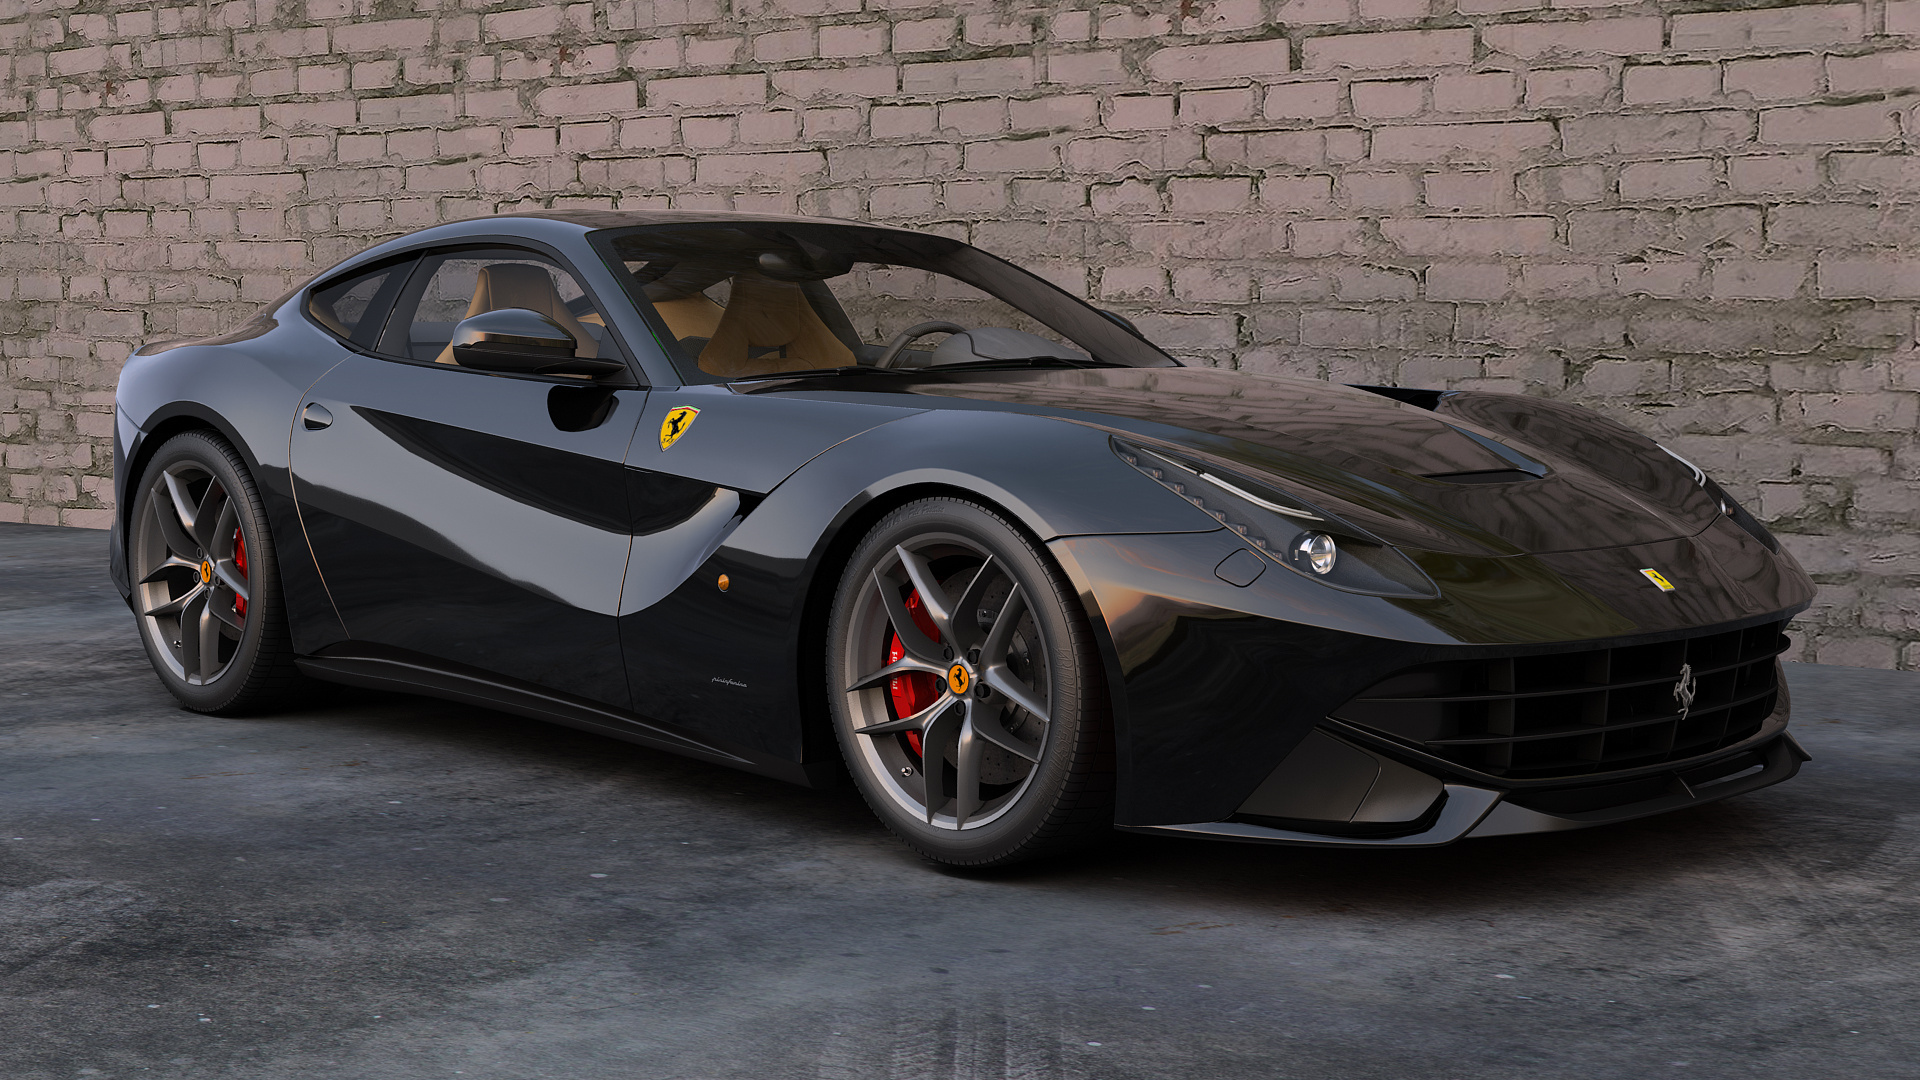 HQ Ferrari F12Berlinetta Background